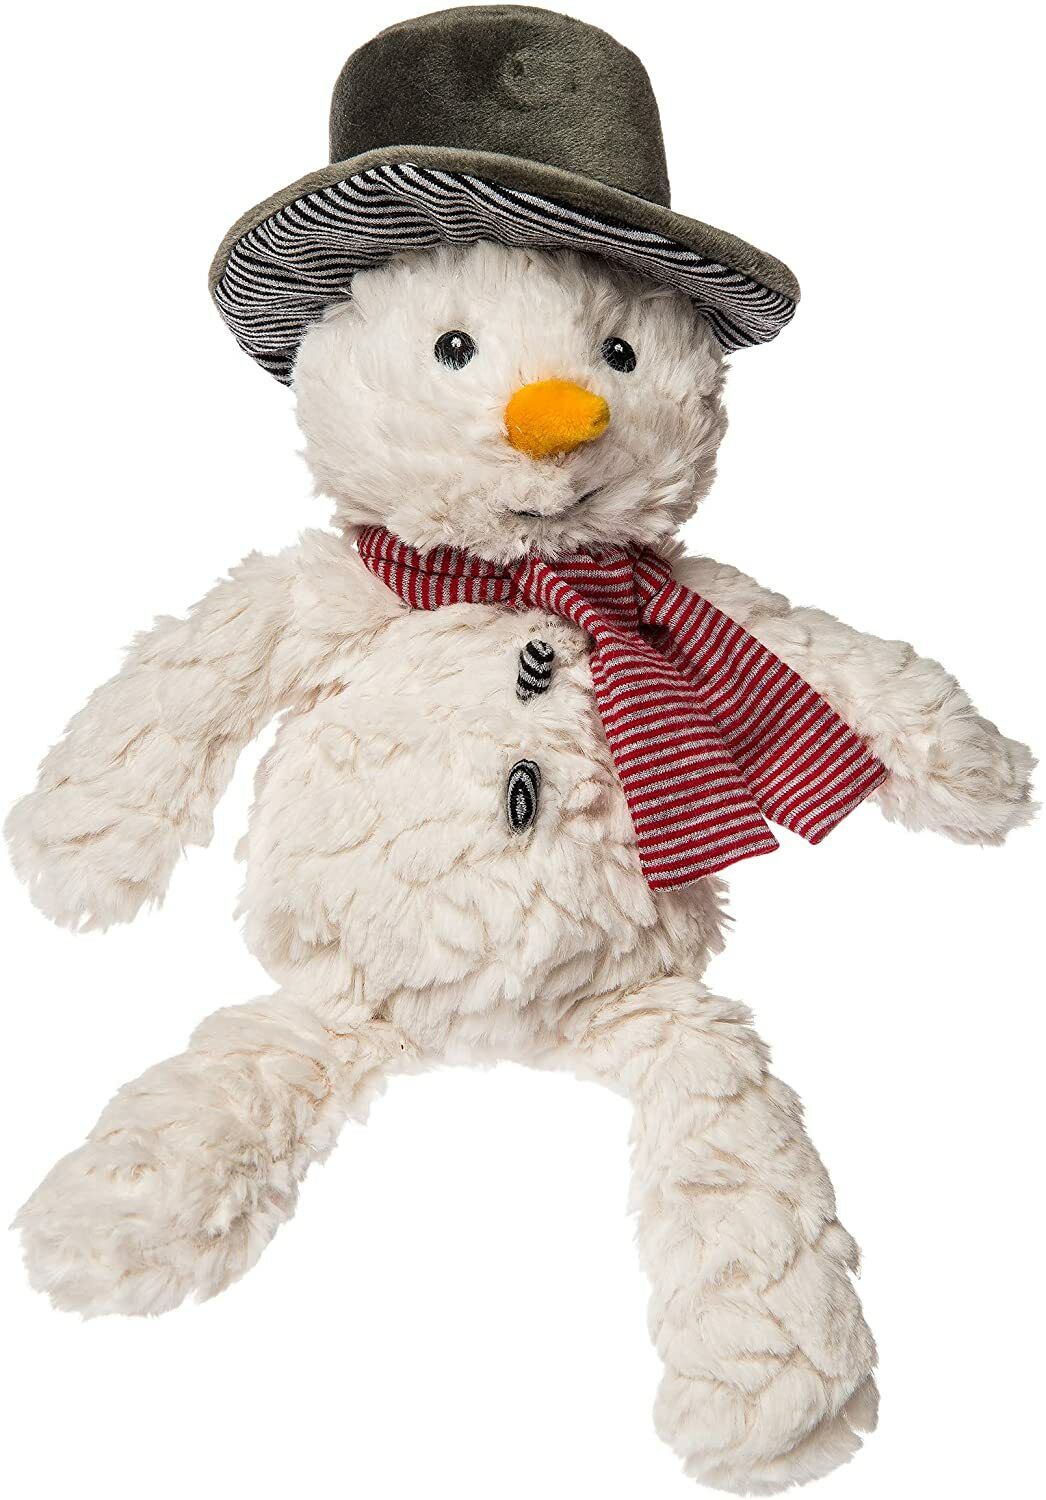 Mary Meyer Putty Blizzard Snowman 11 Inch Soft Plush Stuffed Animal Toy